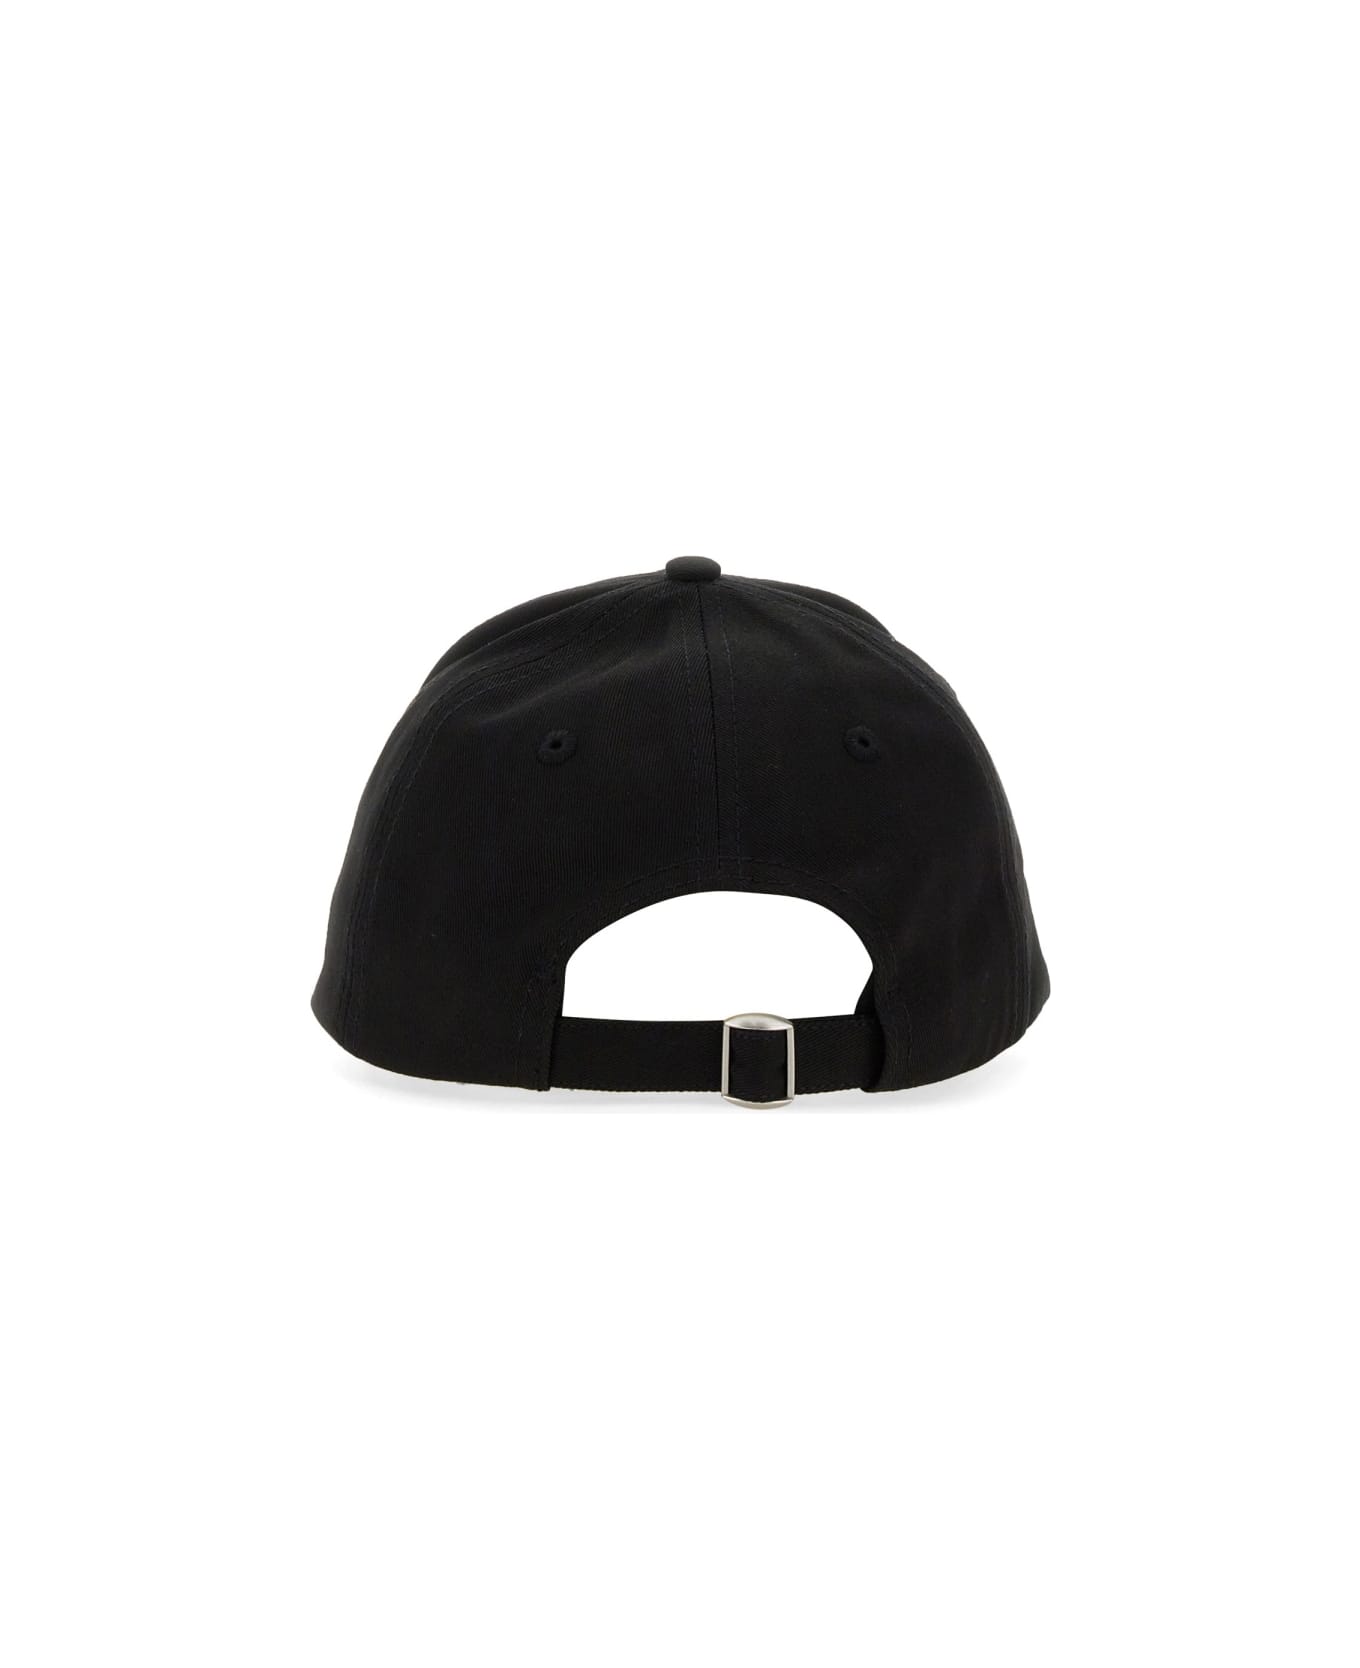 MSGM Baseball Cap - BLACK 帽子